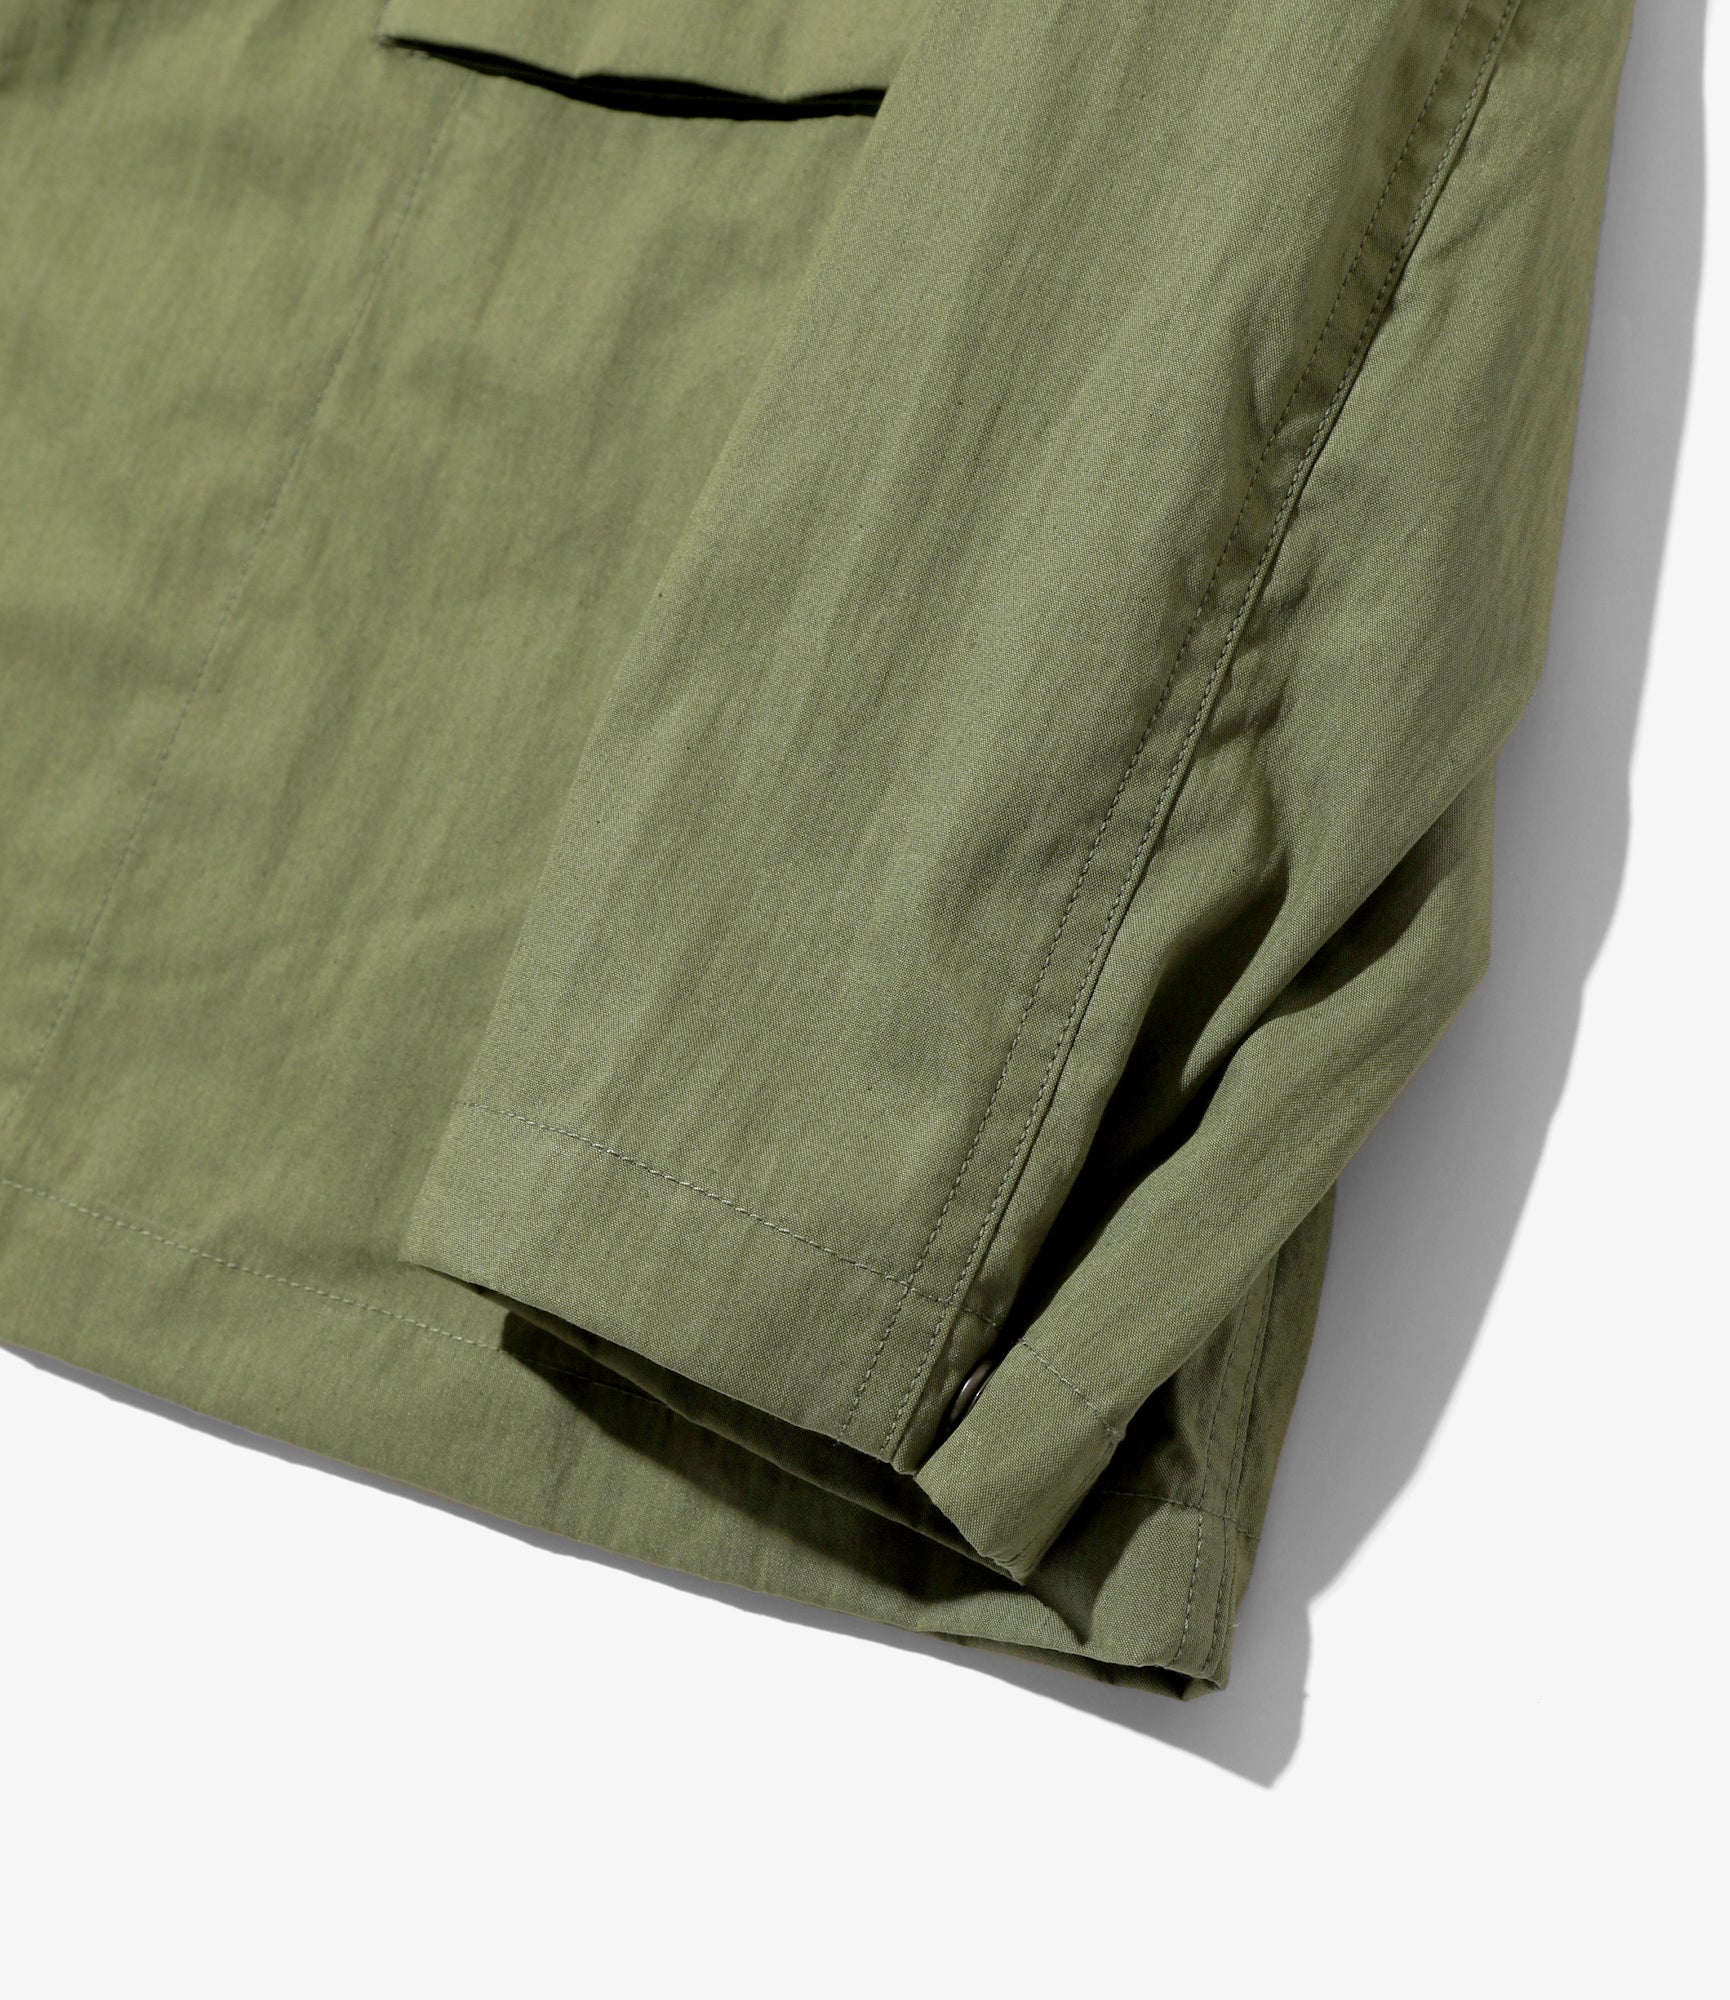 Needles Field Jacket - C/N Oxford Cloth - Olive